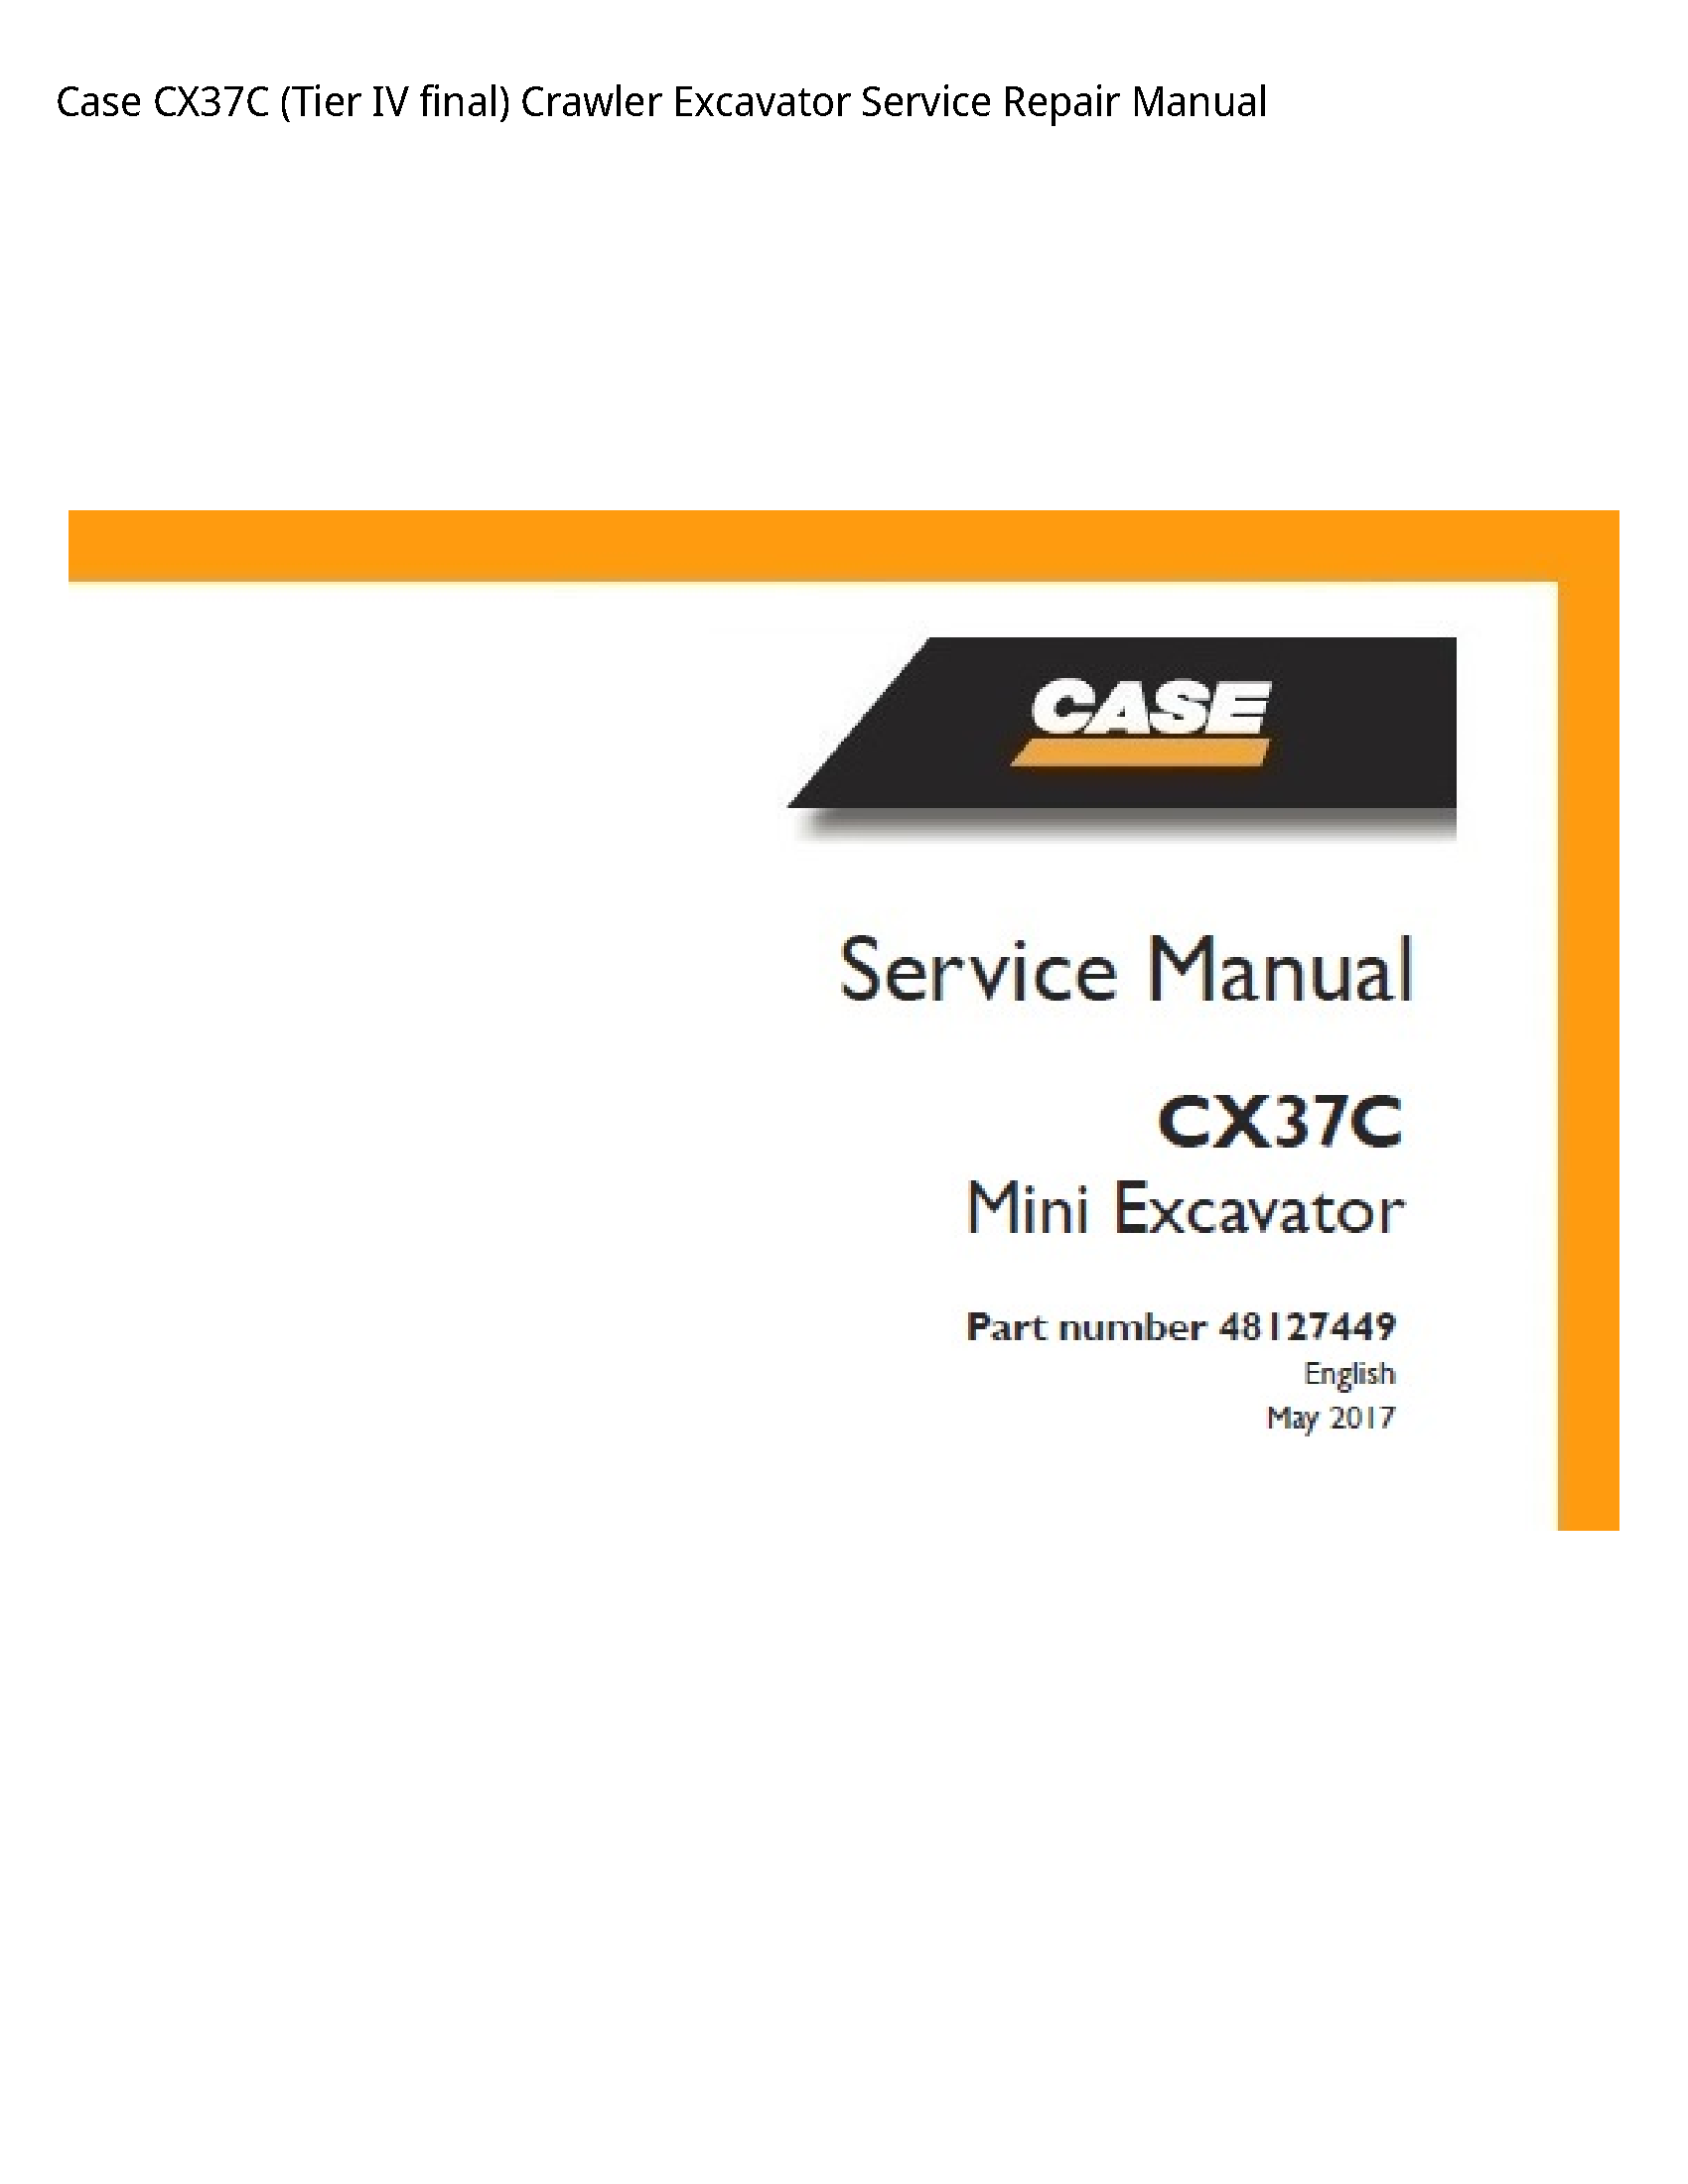 Case/Case IH CX37C (Tier IV final) Crawler Excavator manual